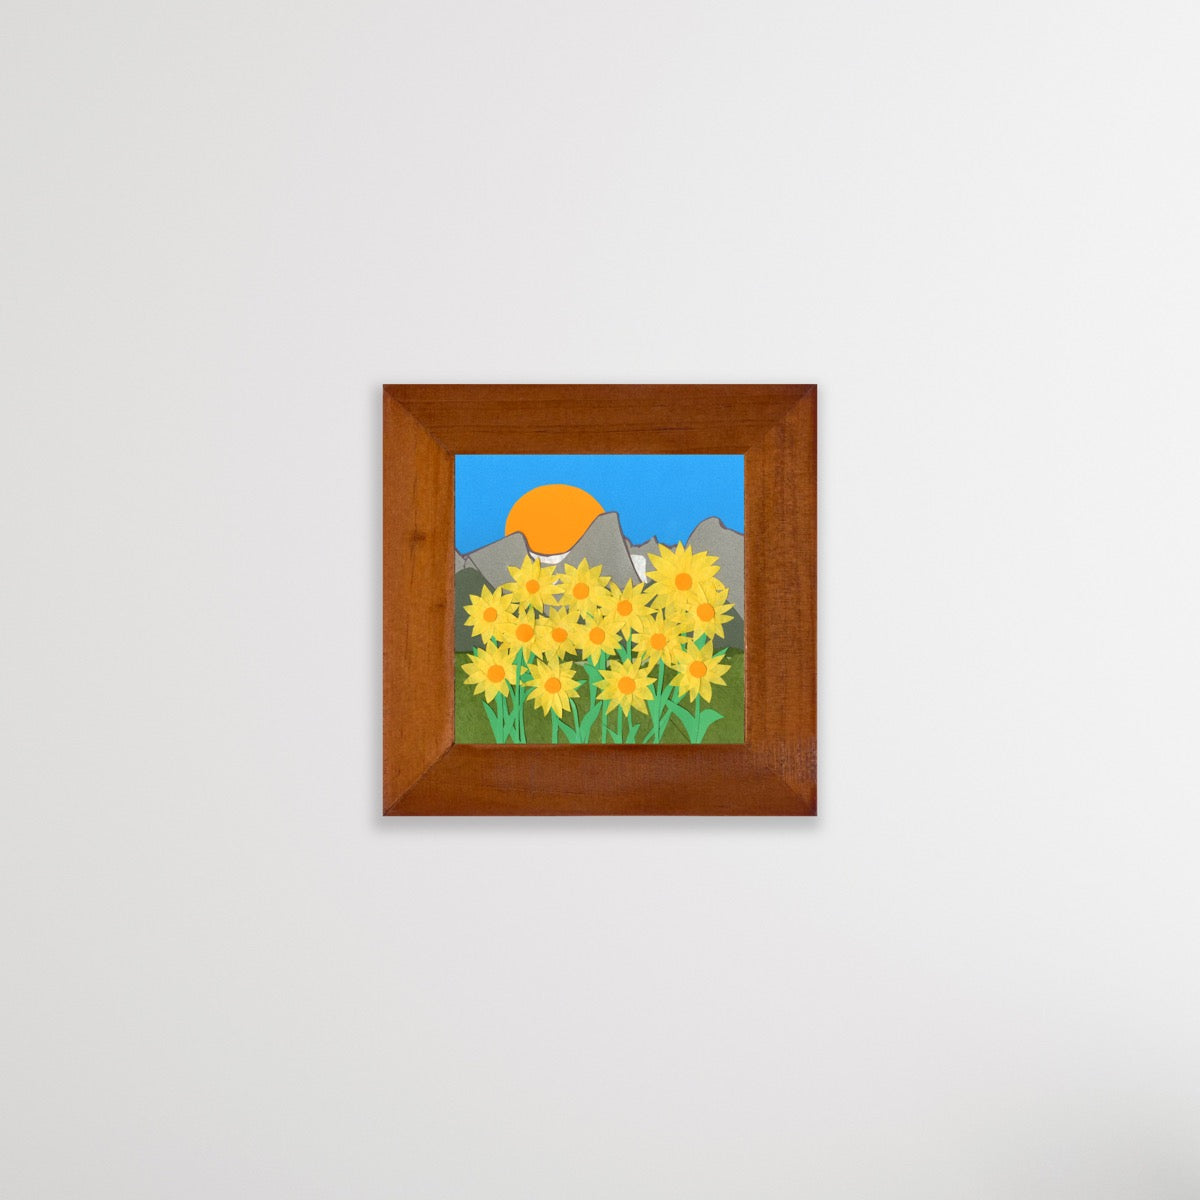 " Teton Sunflower Scape " Paper Collage Art